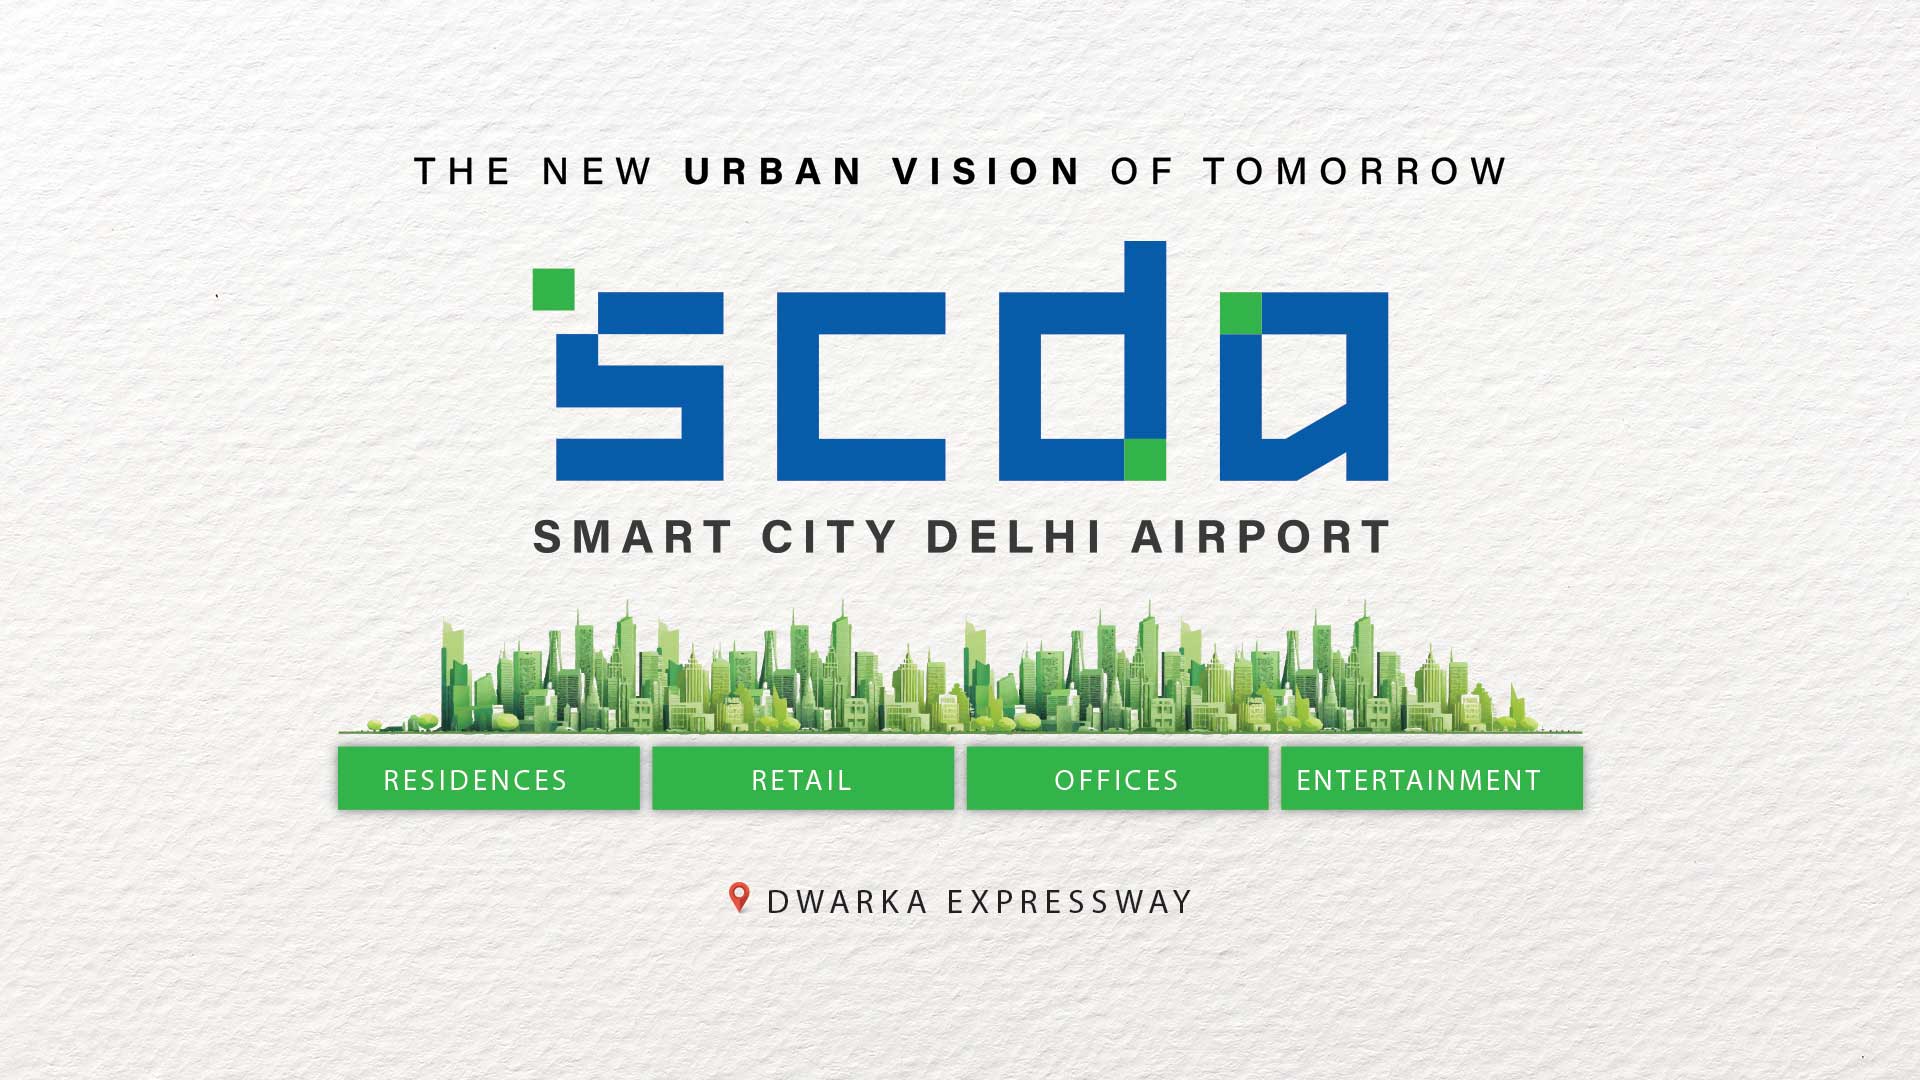 m3m scda smart city delhi airport